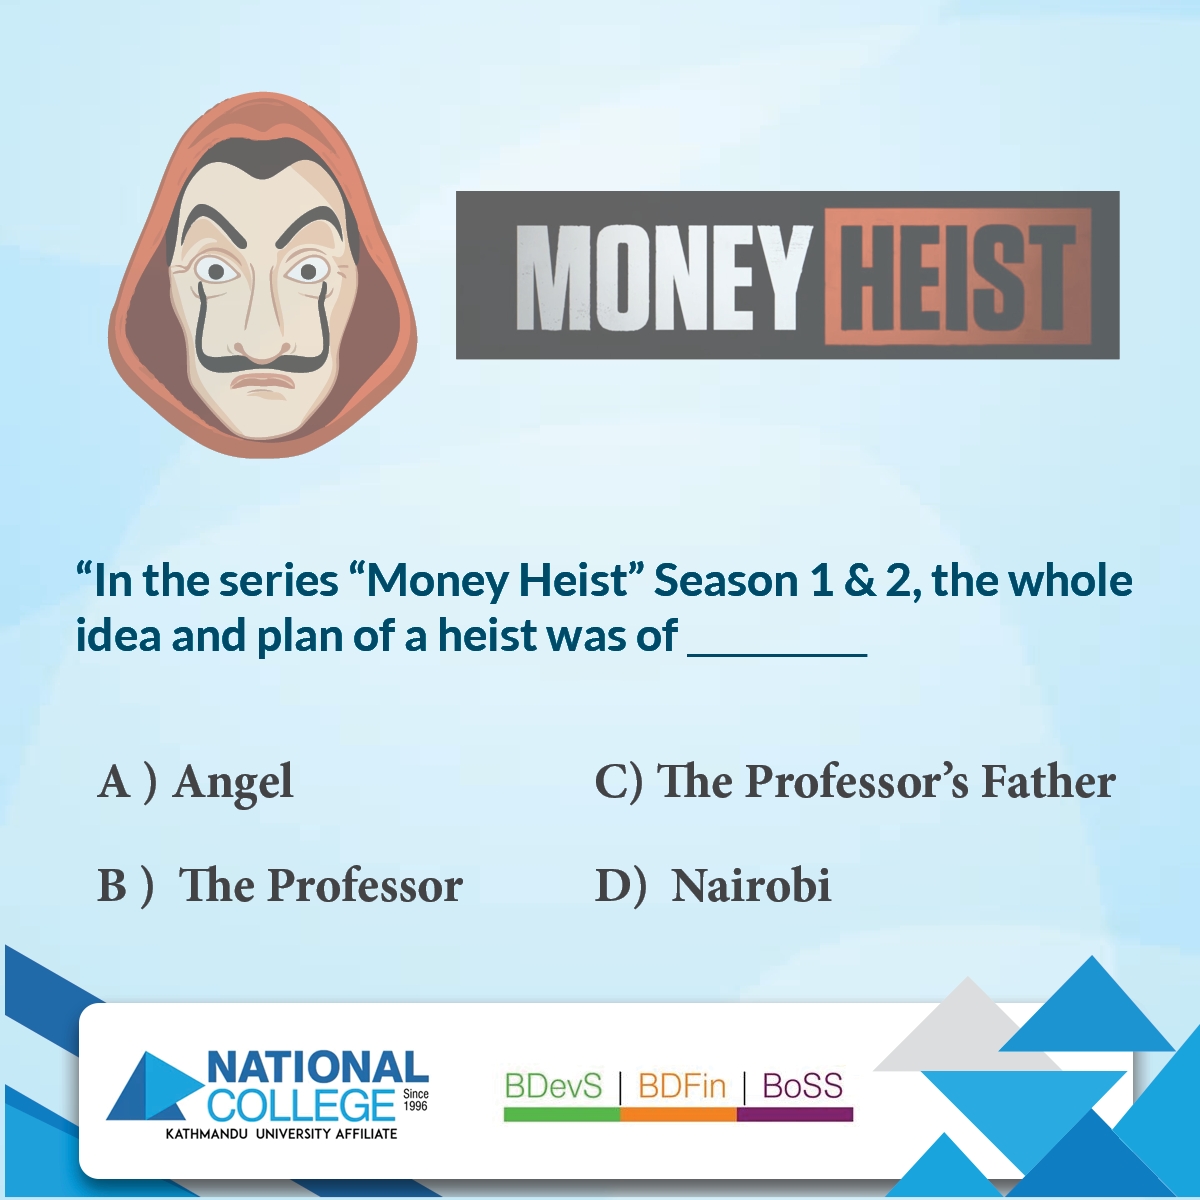 The enthralling series “Money Heist”